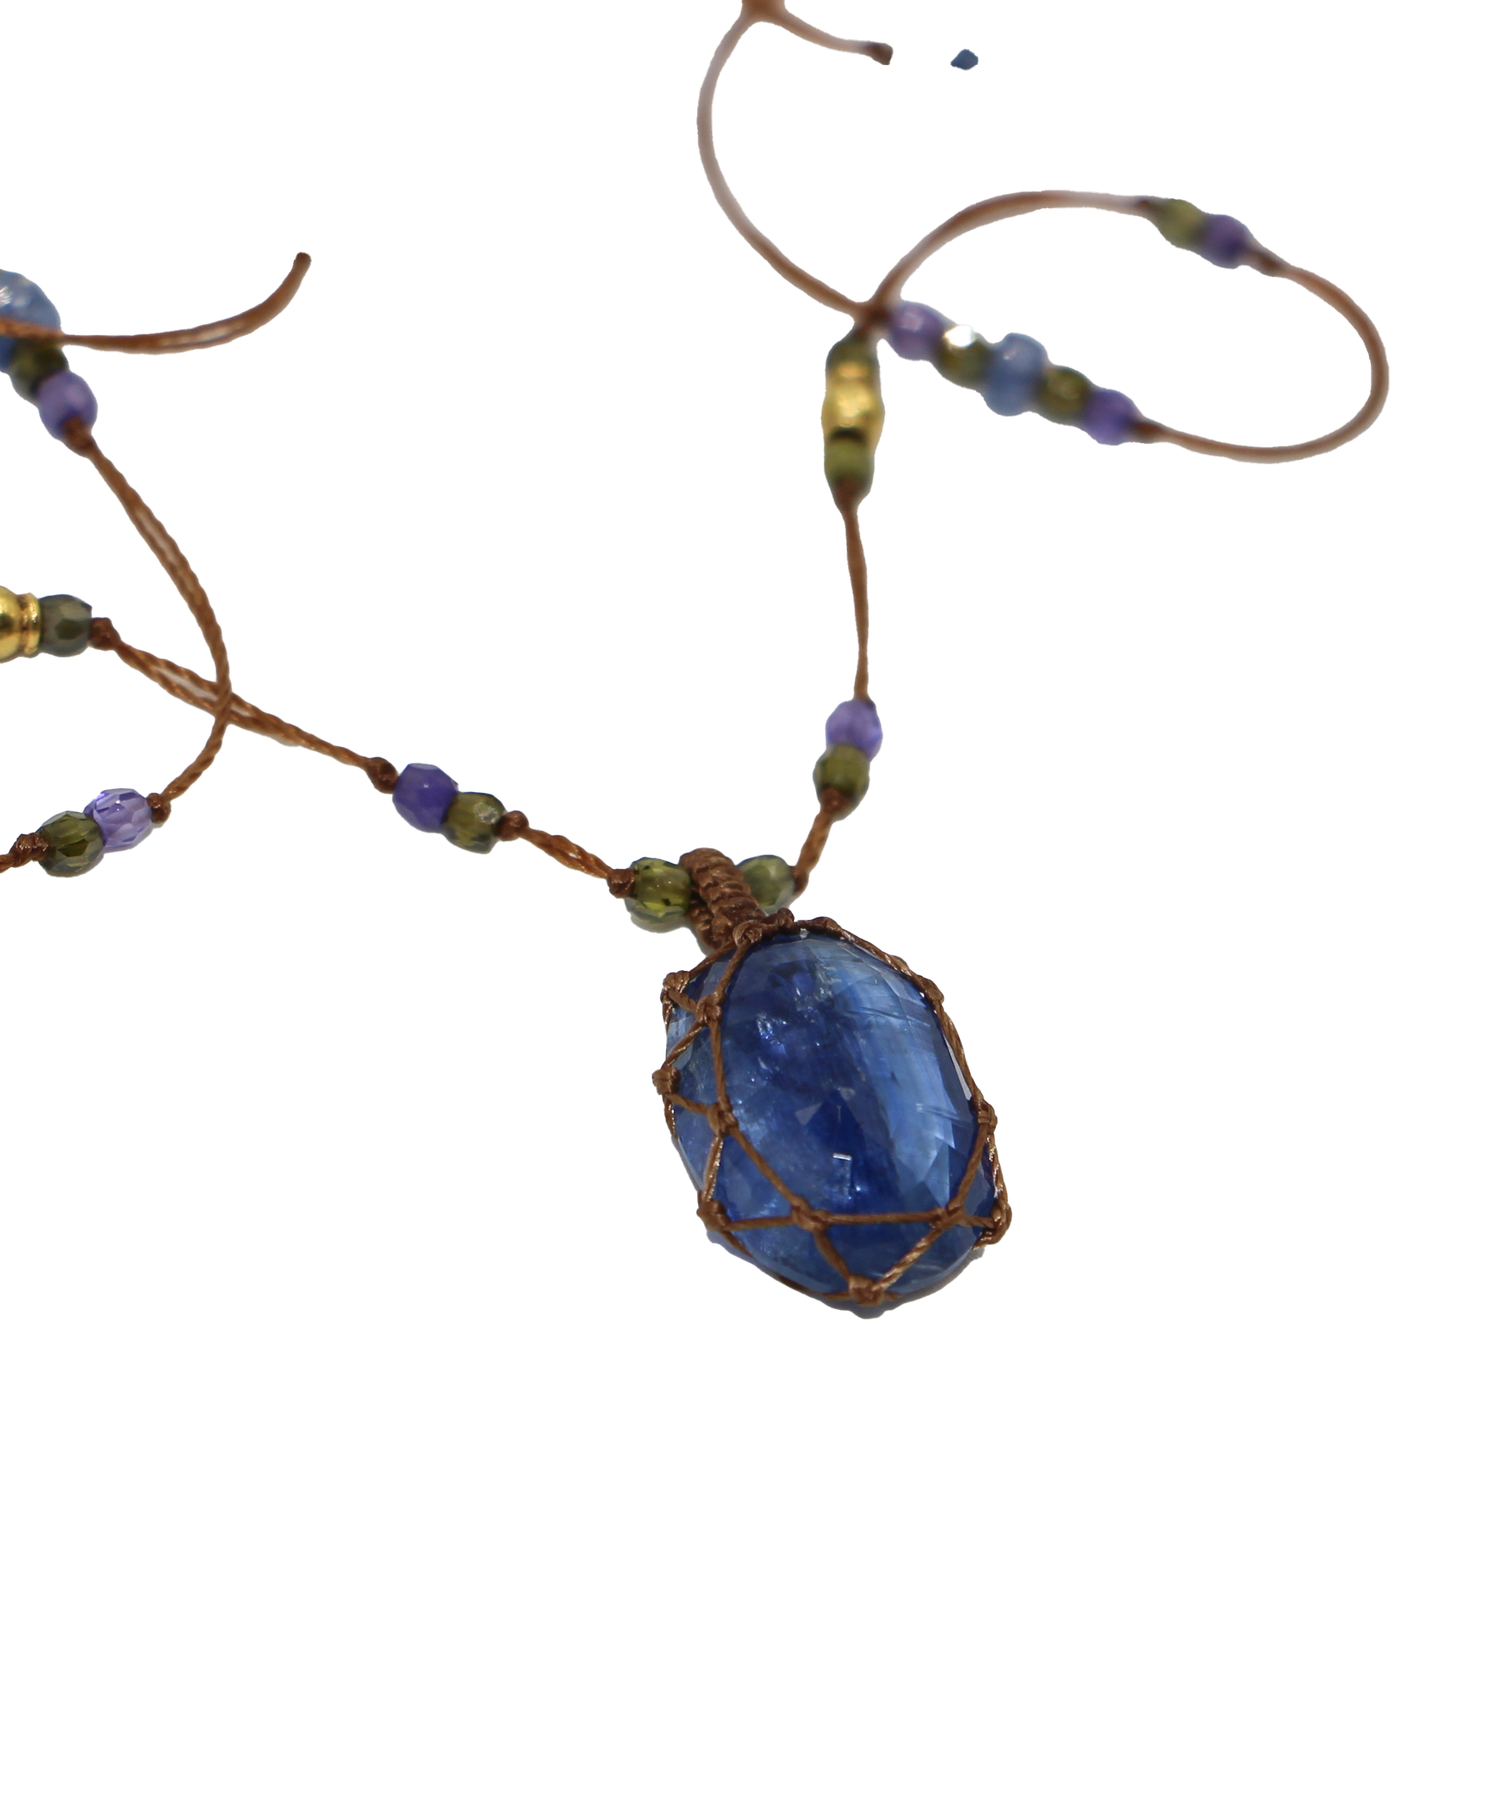 So Precious Short Tibetan Necklace - Blue Kyanite - Mix Sapphire - Tobacco Thread